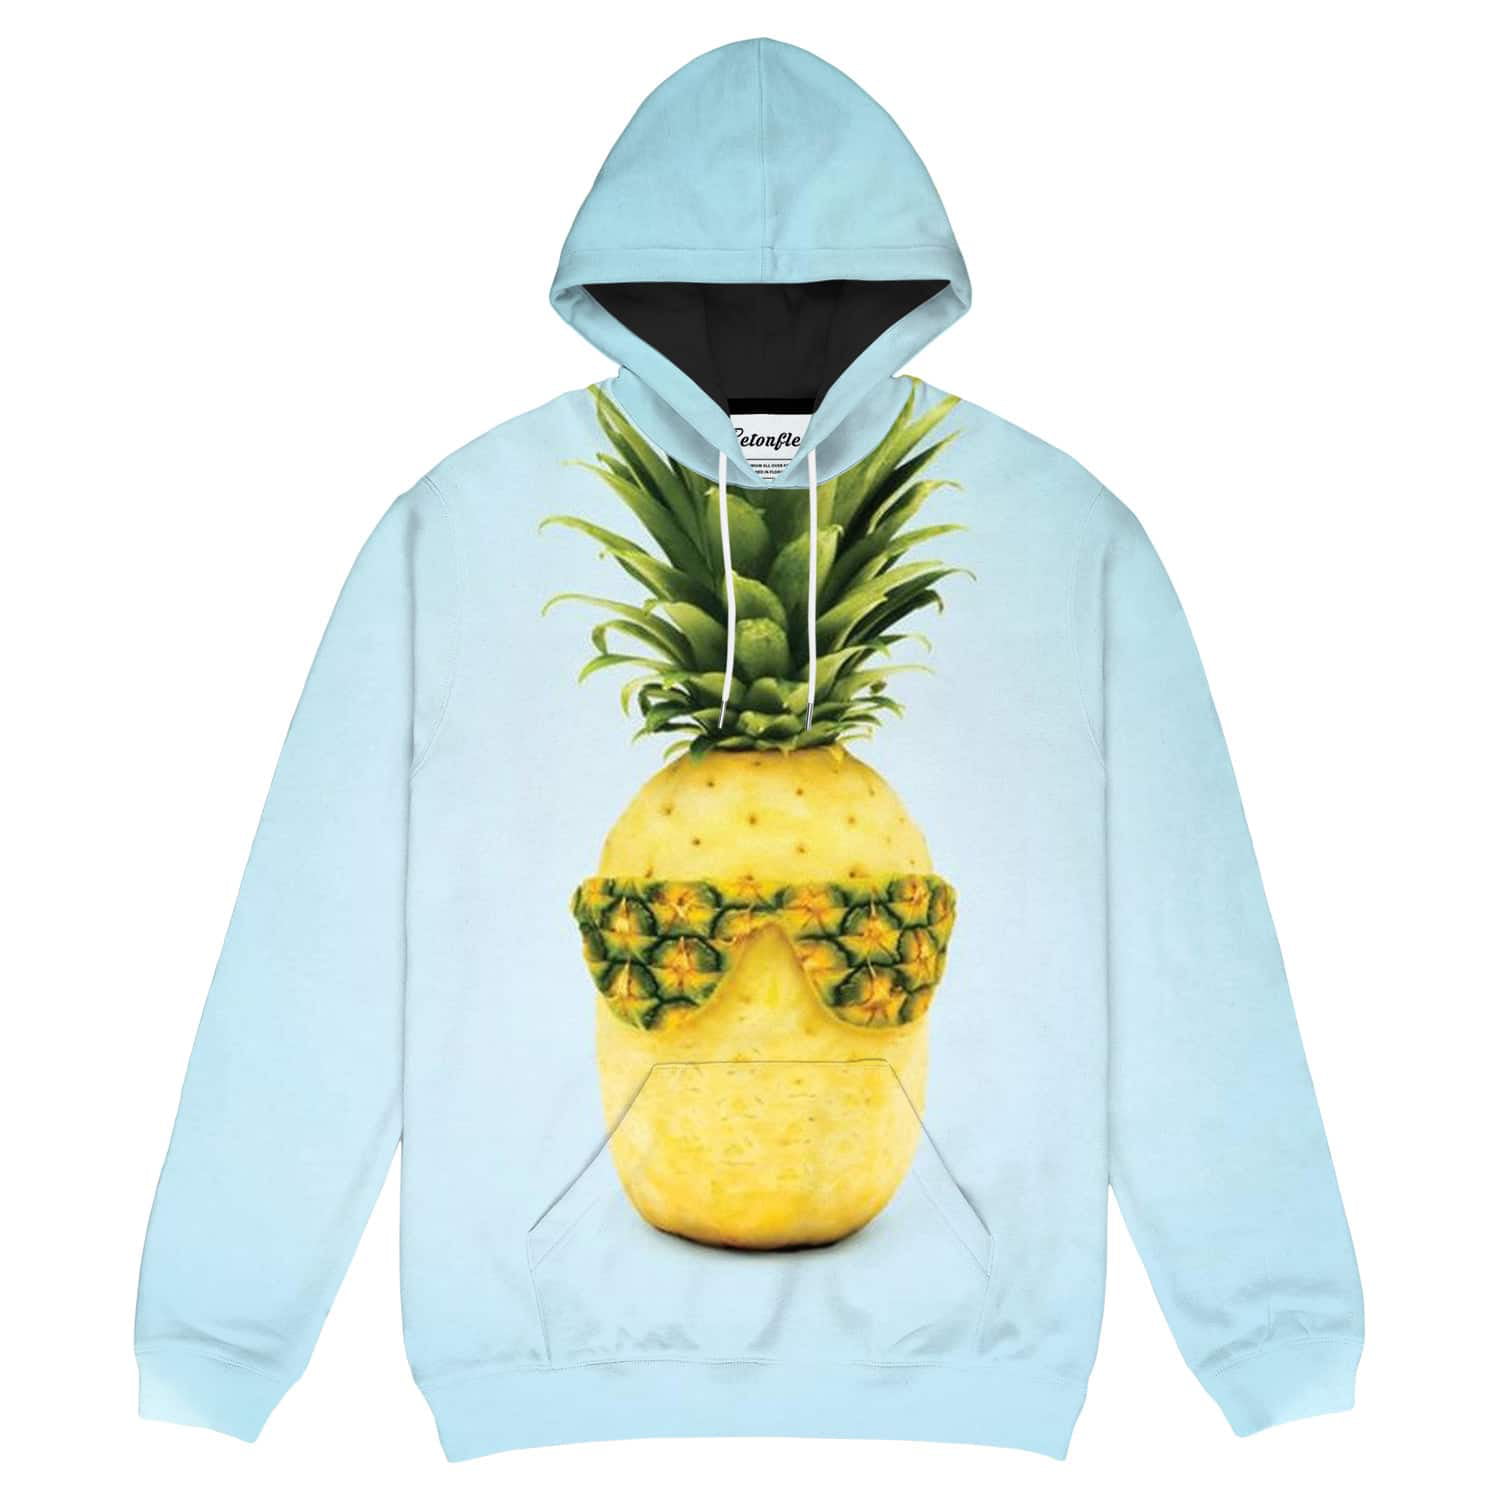 Pineapple Hoodies pineapple pocket Shirt fruit Shirt Hoodies Pullover Long Sleeve High Quality Graphic Hoodies Unisex